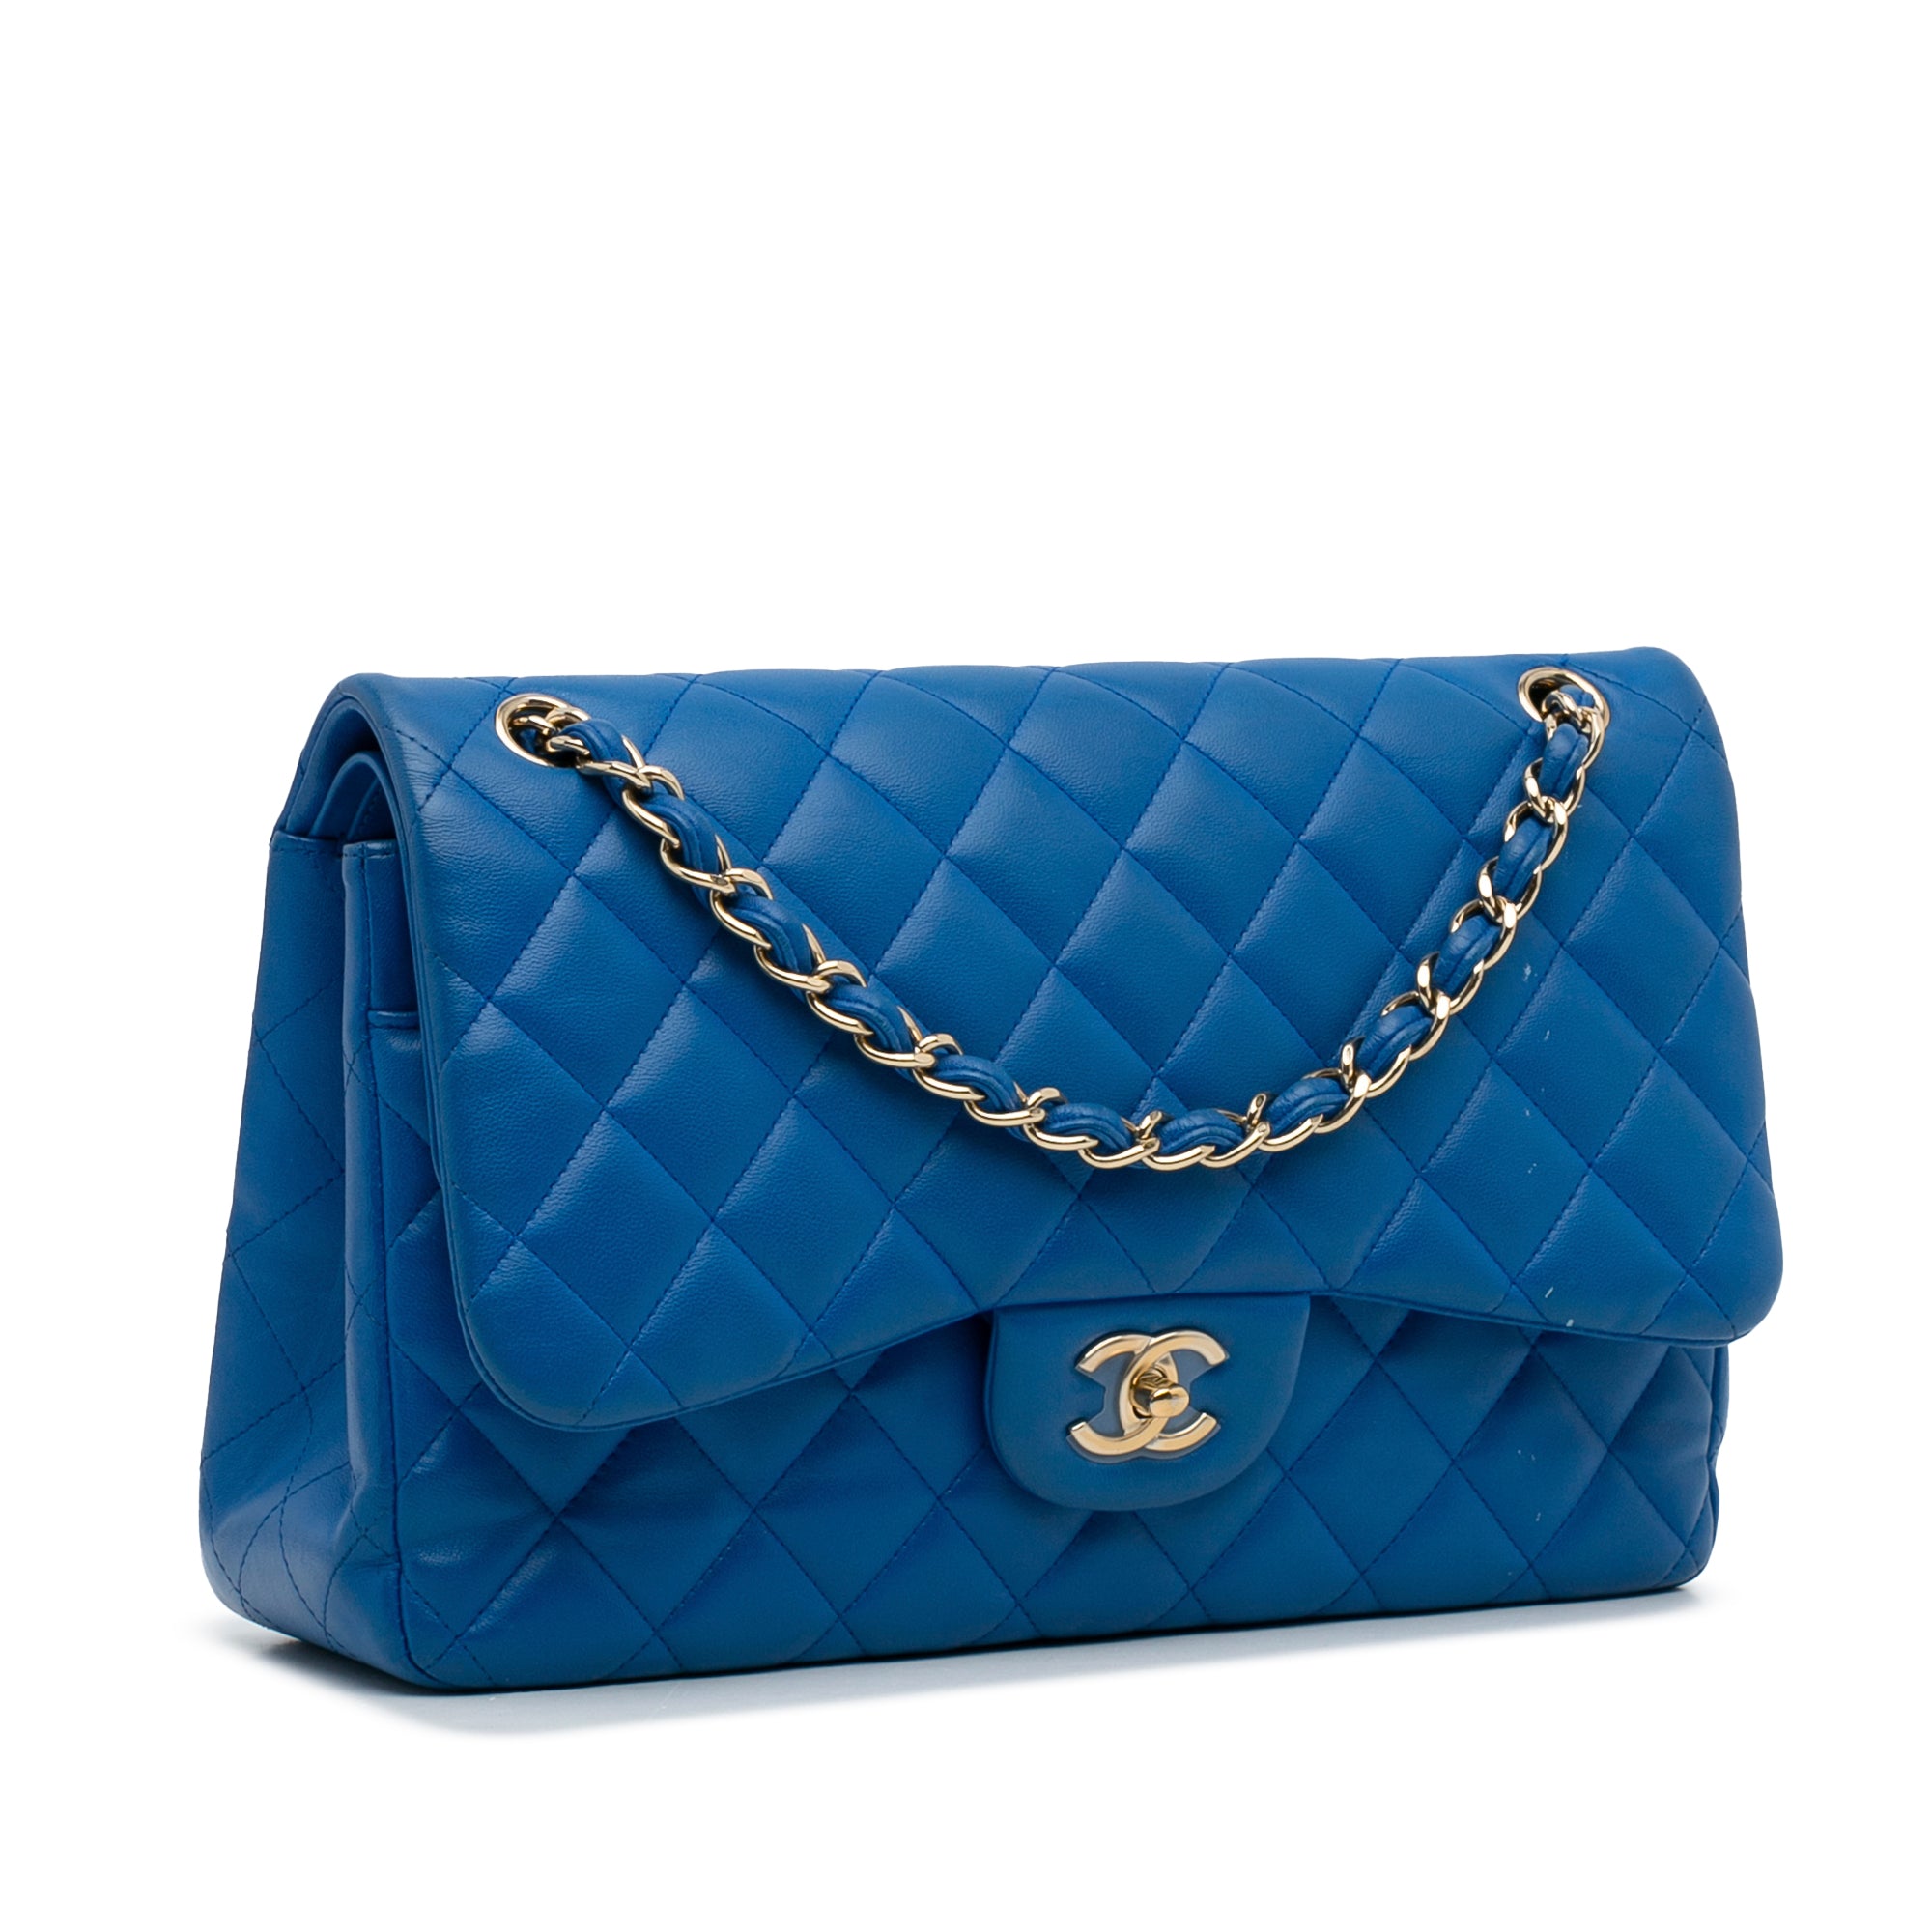 Second hand luxury bags - buy Pre-owned at Tabita Bags – Tabita